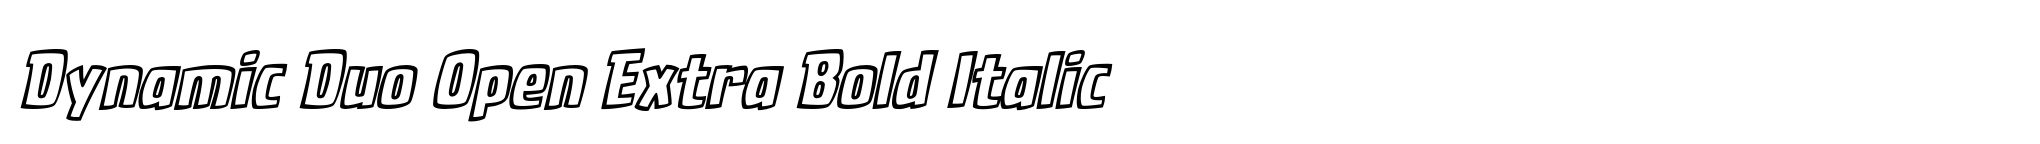 Dynamic Duo Open Extra Bold Italic image